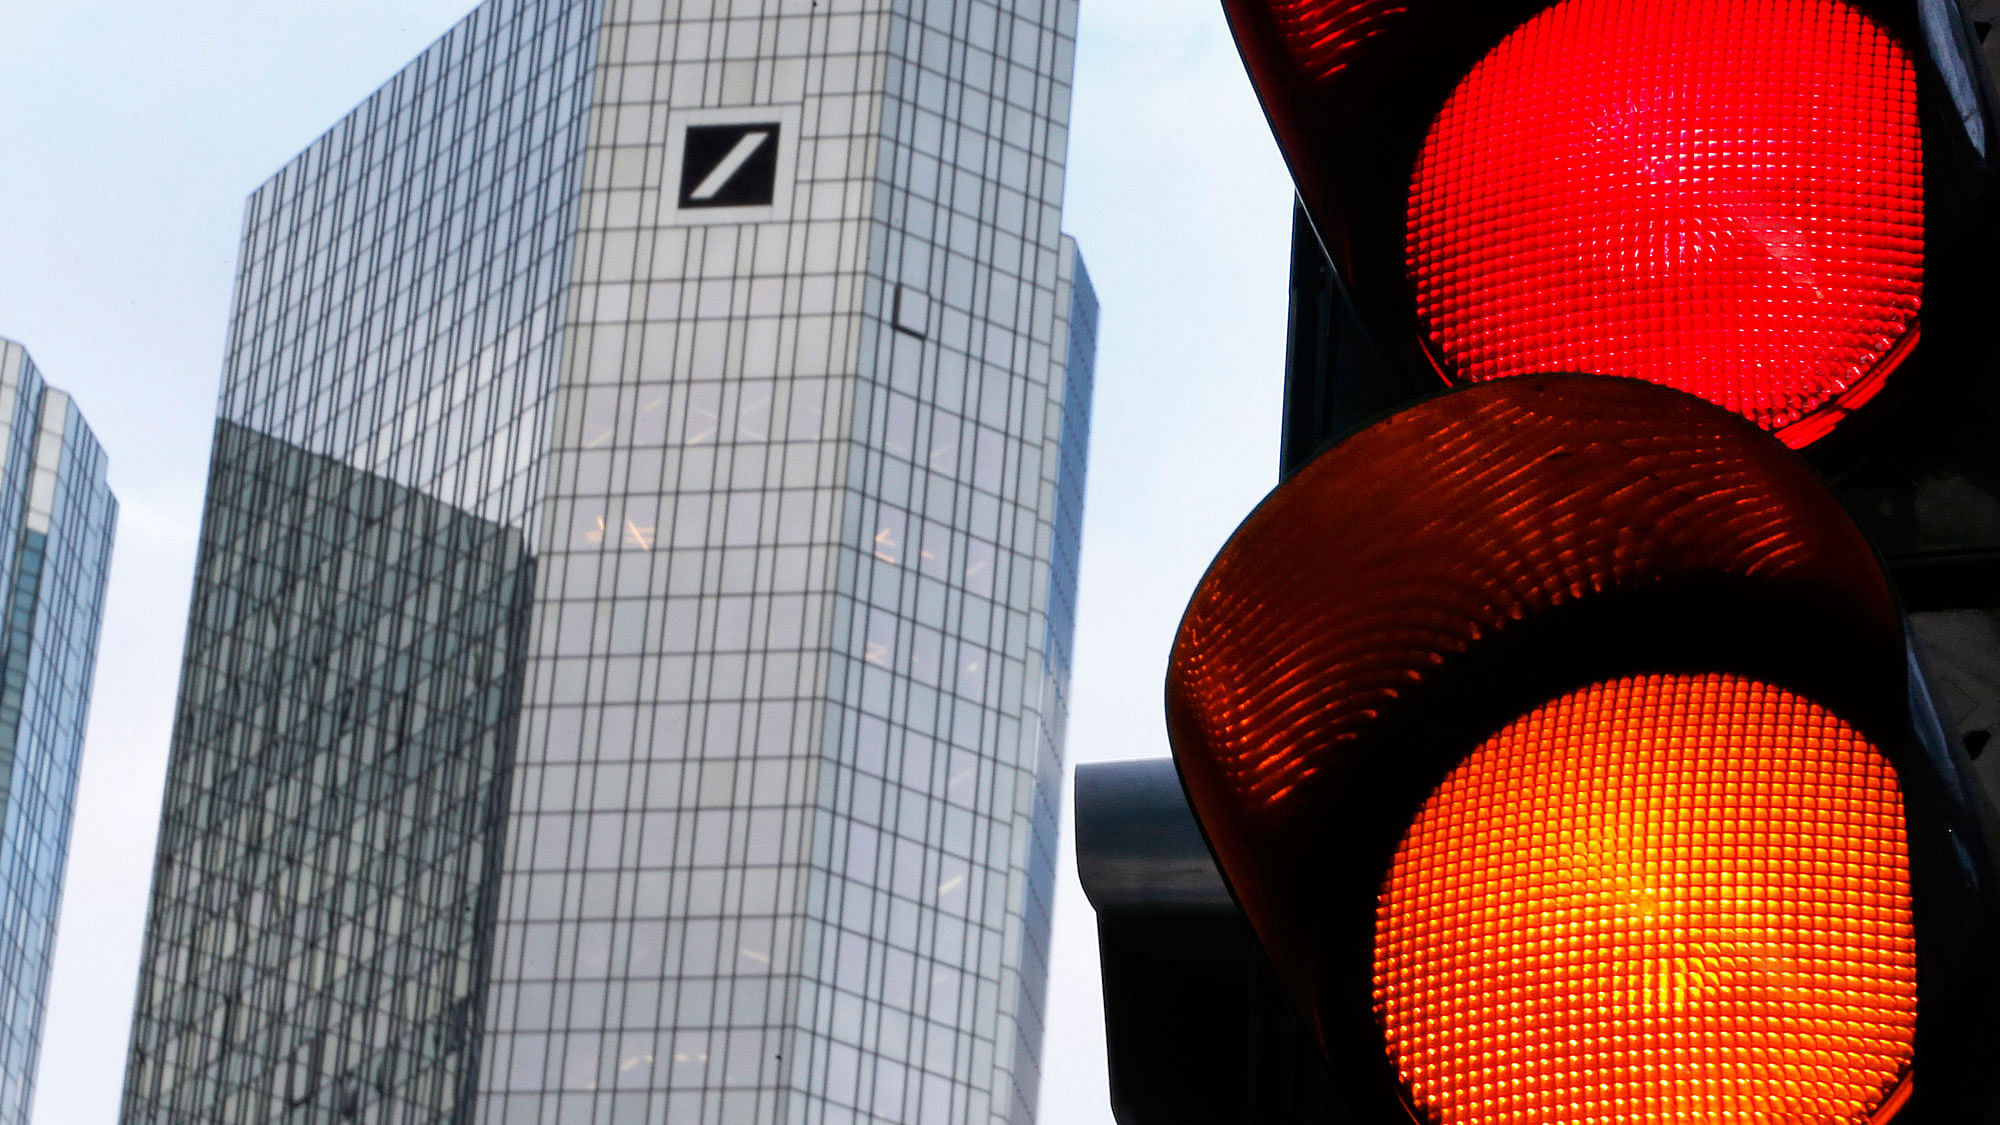 Traffic lights stand near the headquarters of Deutsche Bank in Frankfurt, Germany. (Photo: AP)